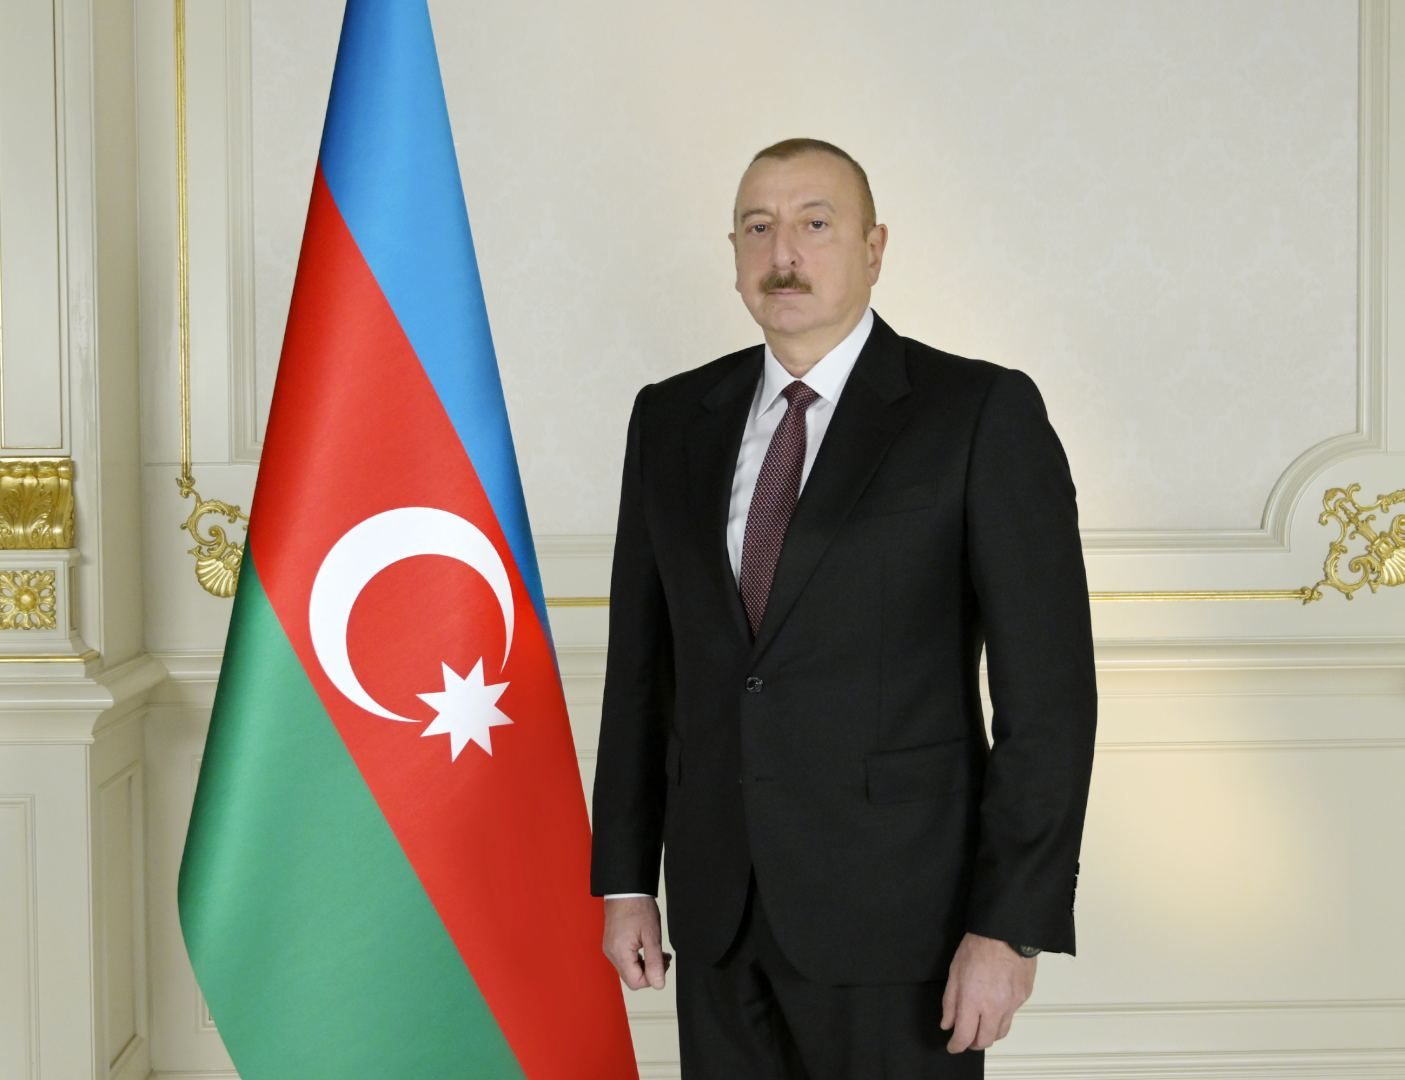 Amendments made to regulations on non-staff Consul of Azerbaijan